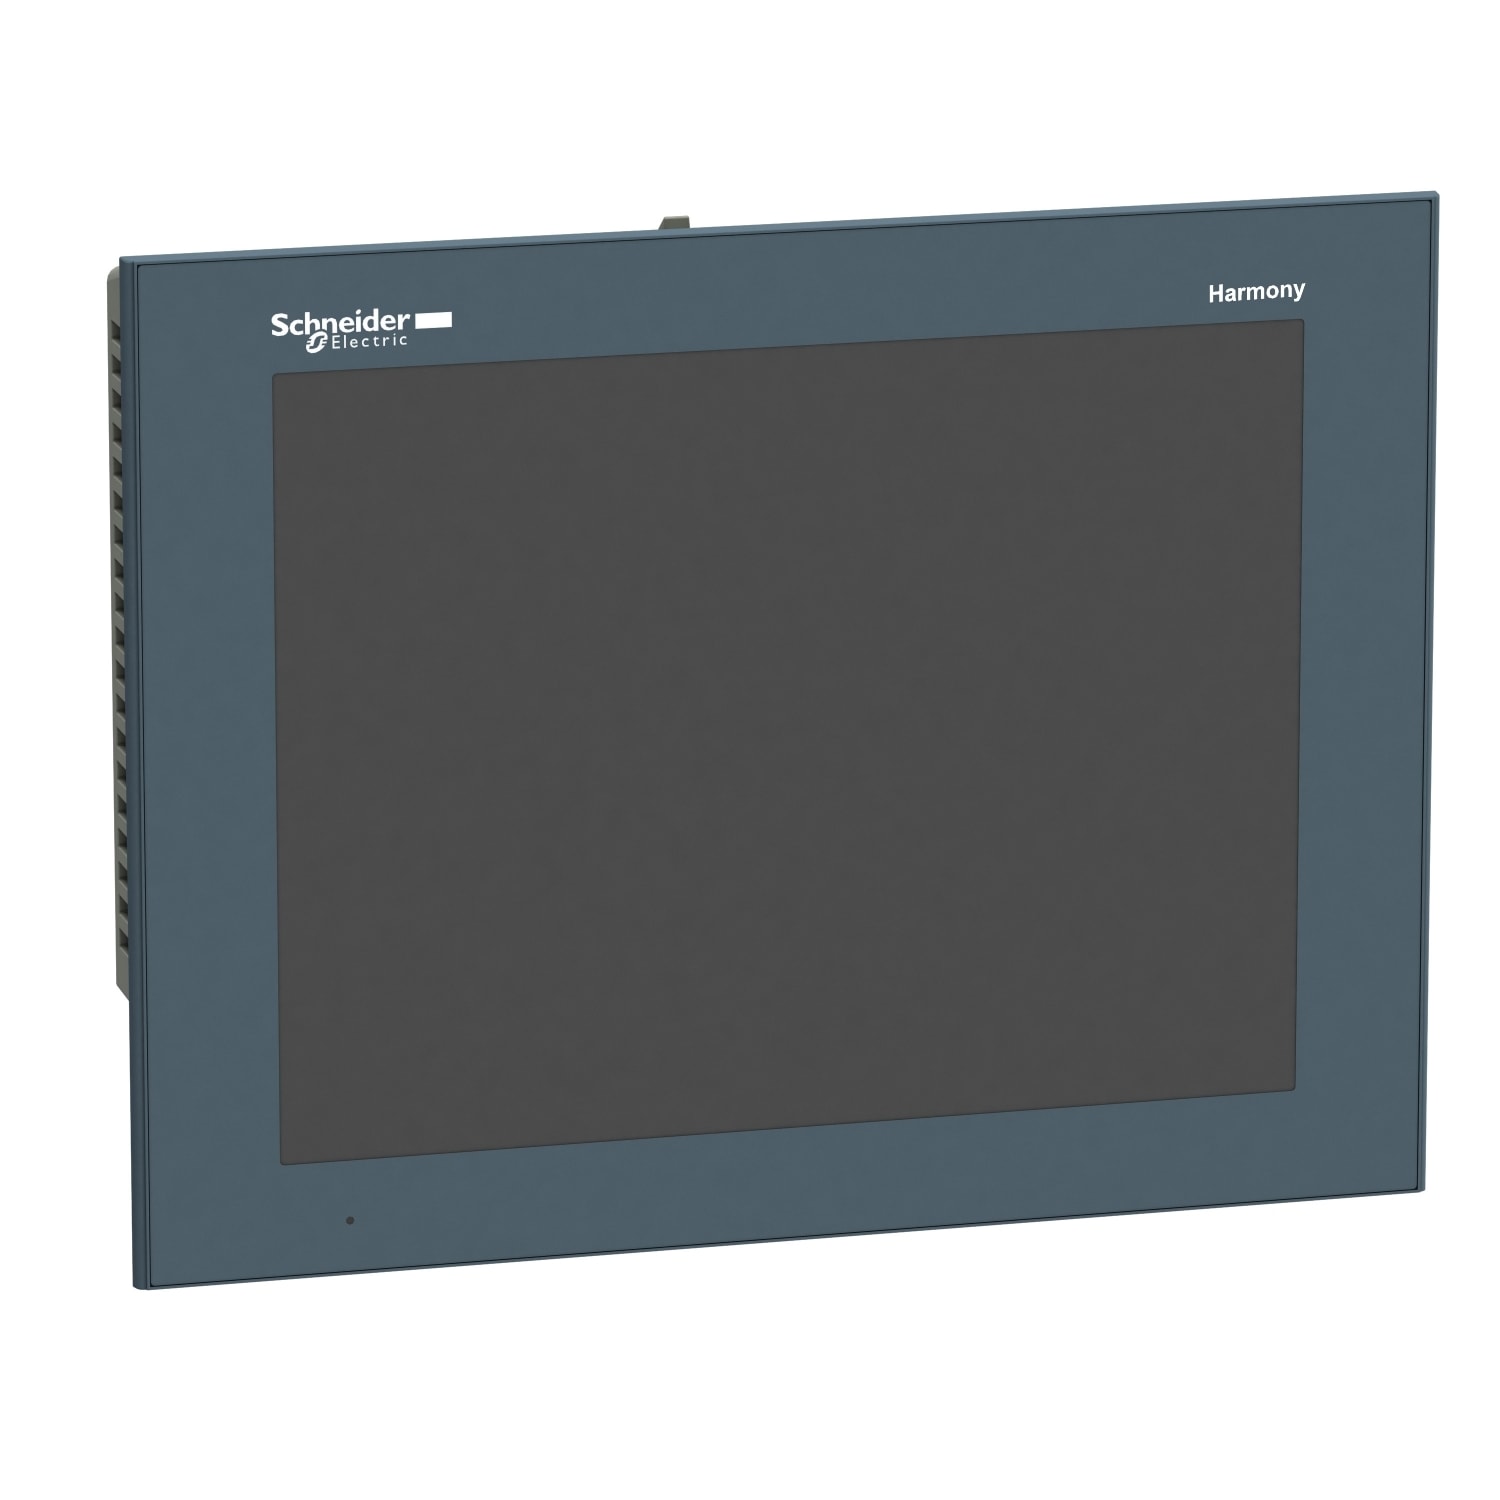 Schneider Electric - Harmony GTO - terminal IHM tactile - 800x600 pixels SVGA - 12,1p - TFT - 96MB